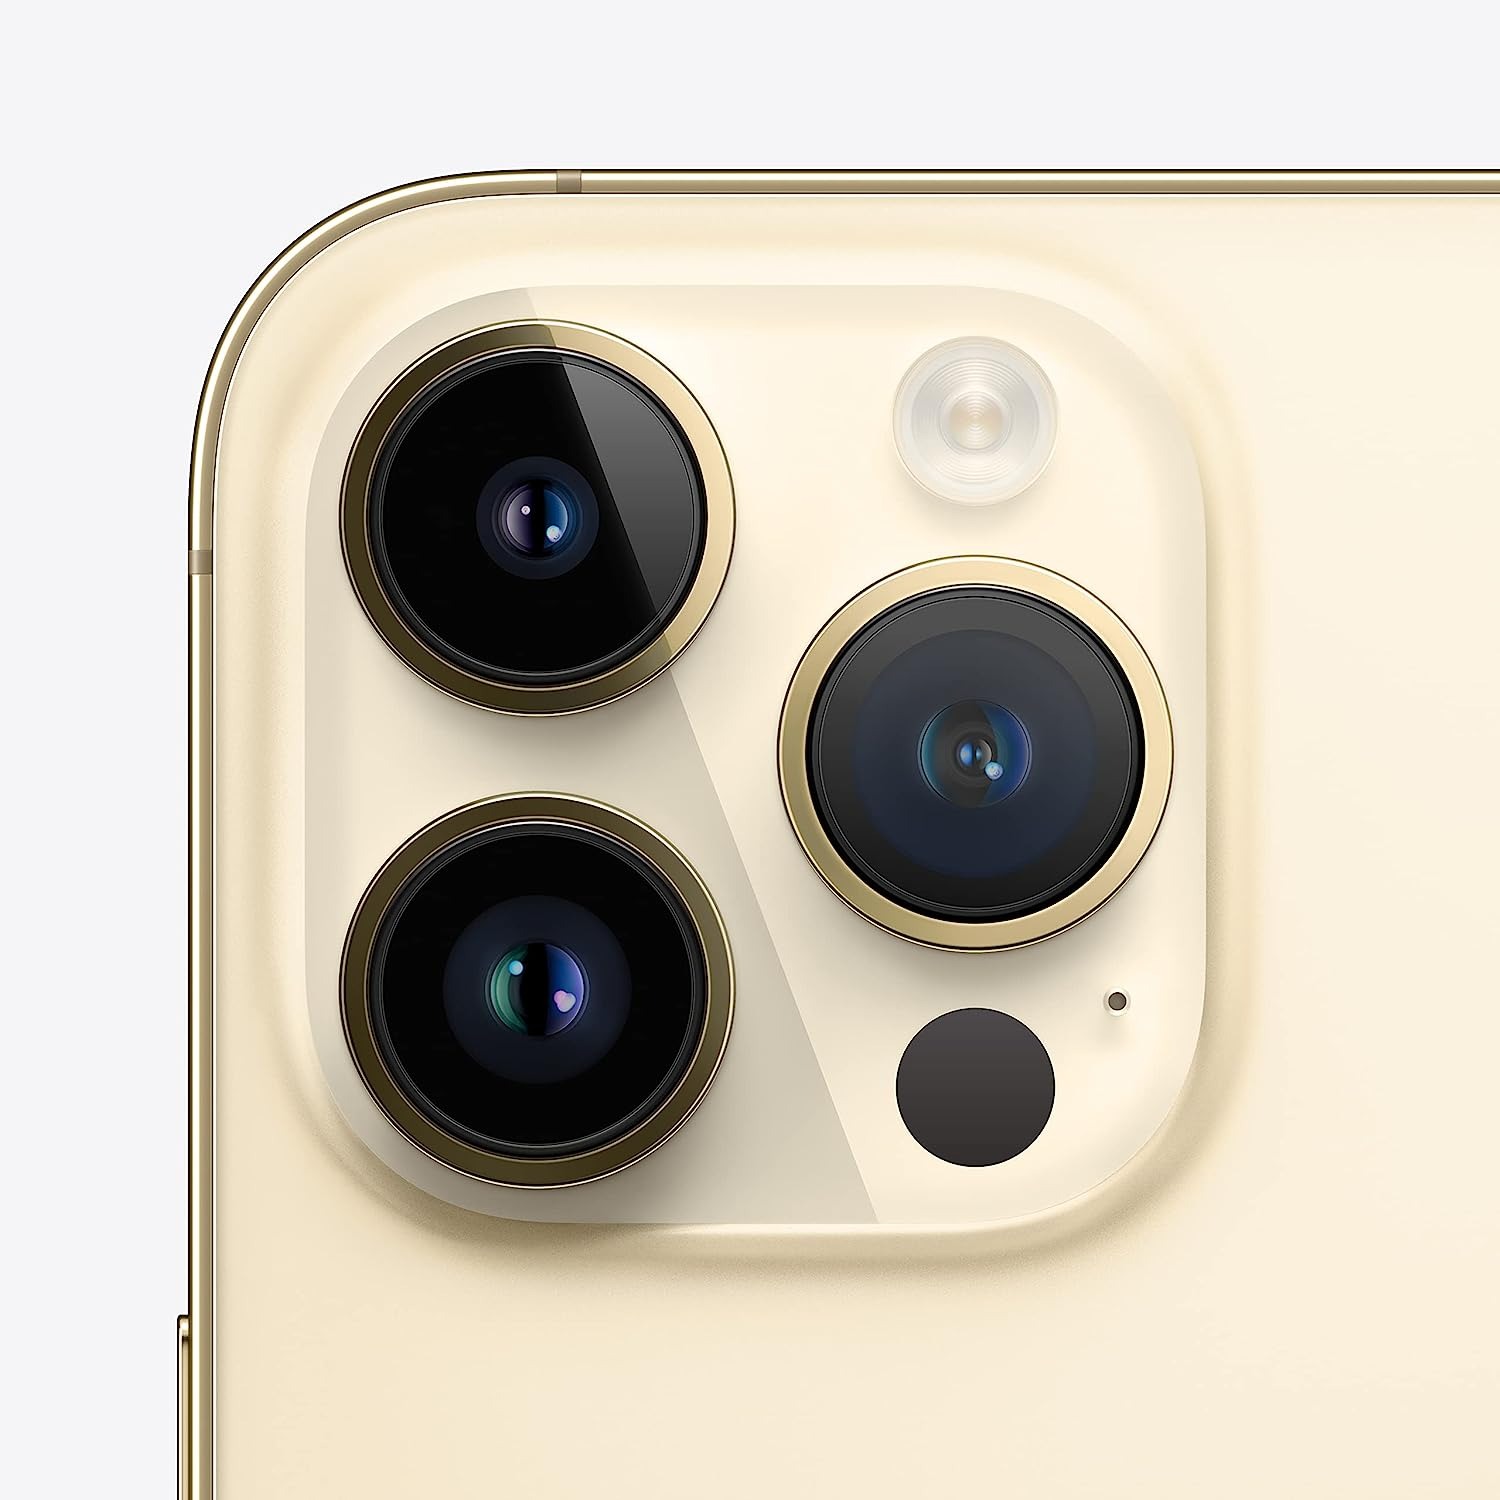 (GLOBAL)Apple iPhone 14 Pro (256 GB) - GOLD - Gold, 256GB